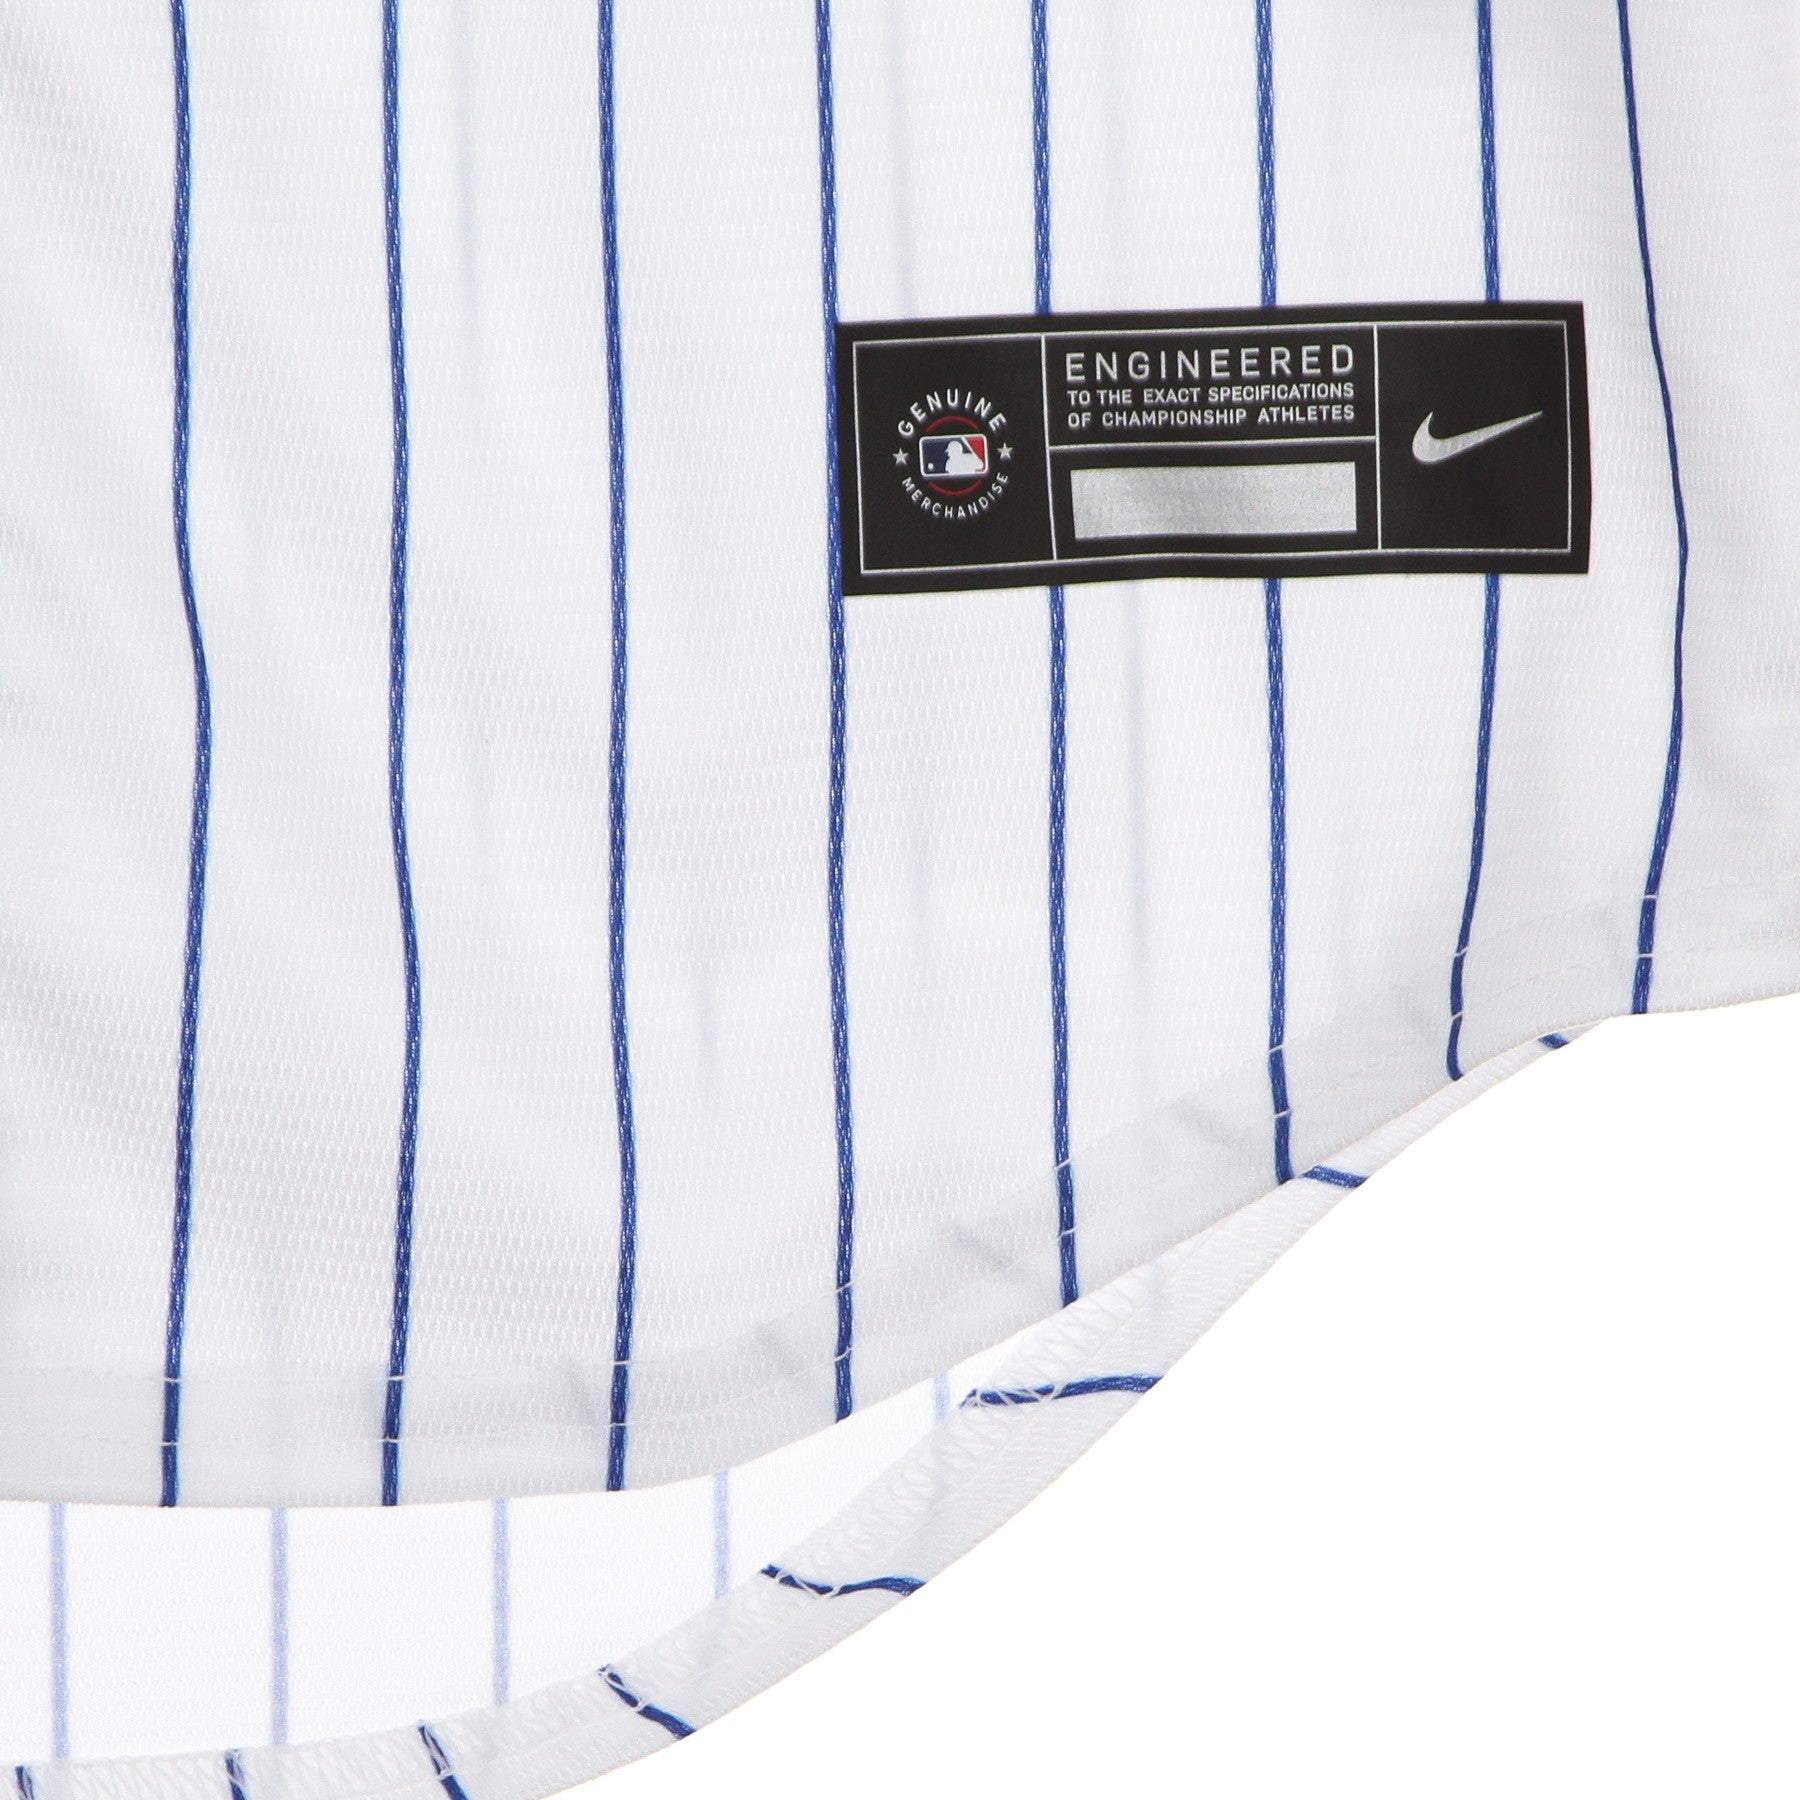 Men's MLB Official Replica Jersey Neymet Home Baseball Jacket